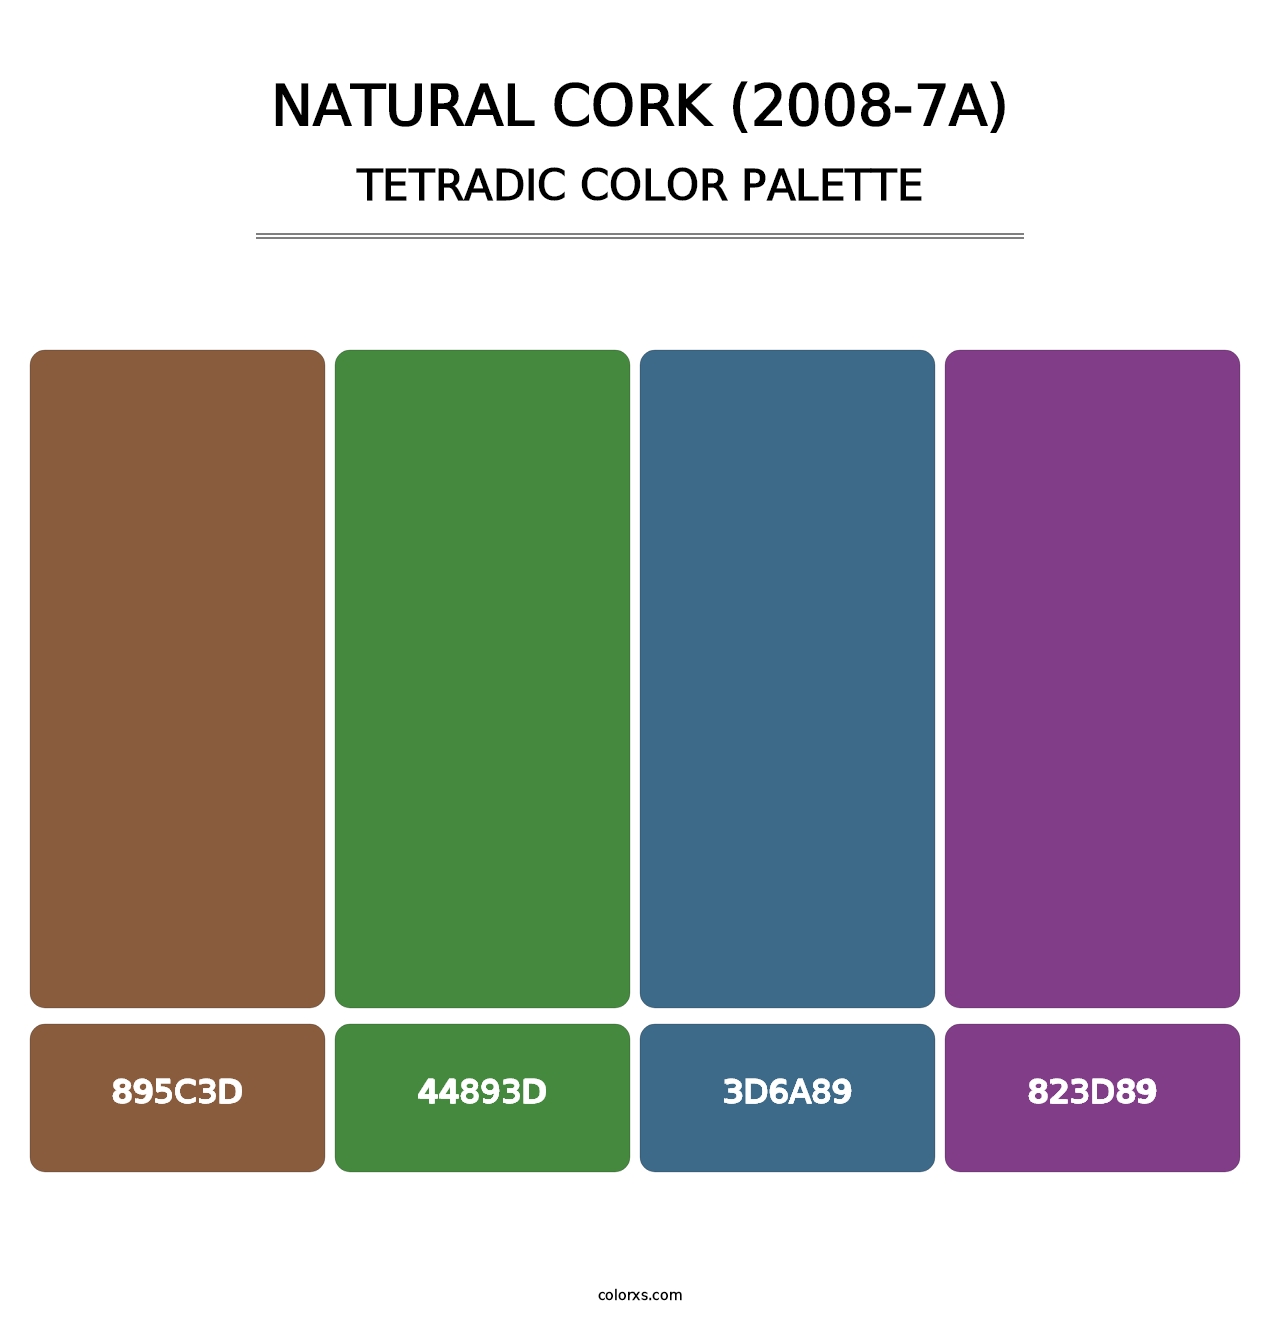 Natural Cork (2008-7A) - Tetradic Color Palette